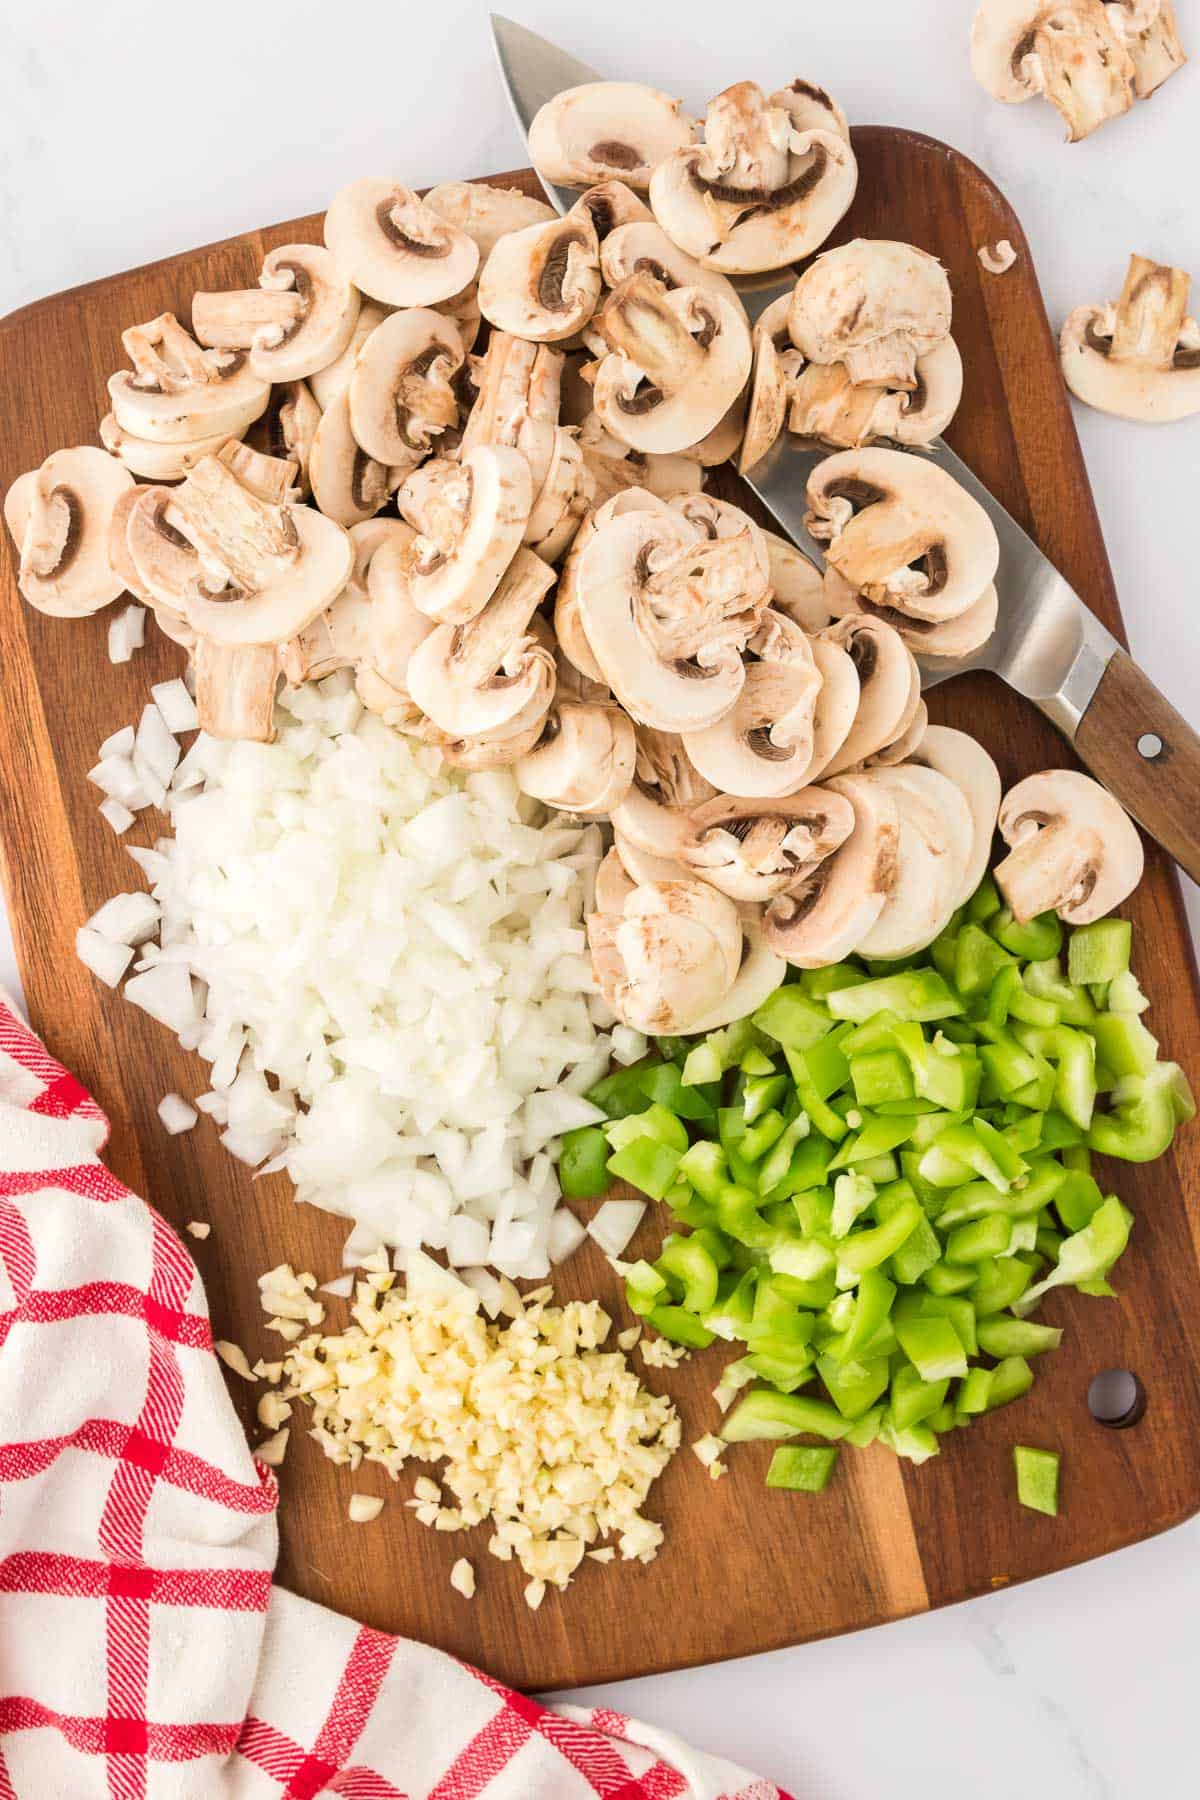 chopped mushrooms, onion, green bell pepper, and garlic